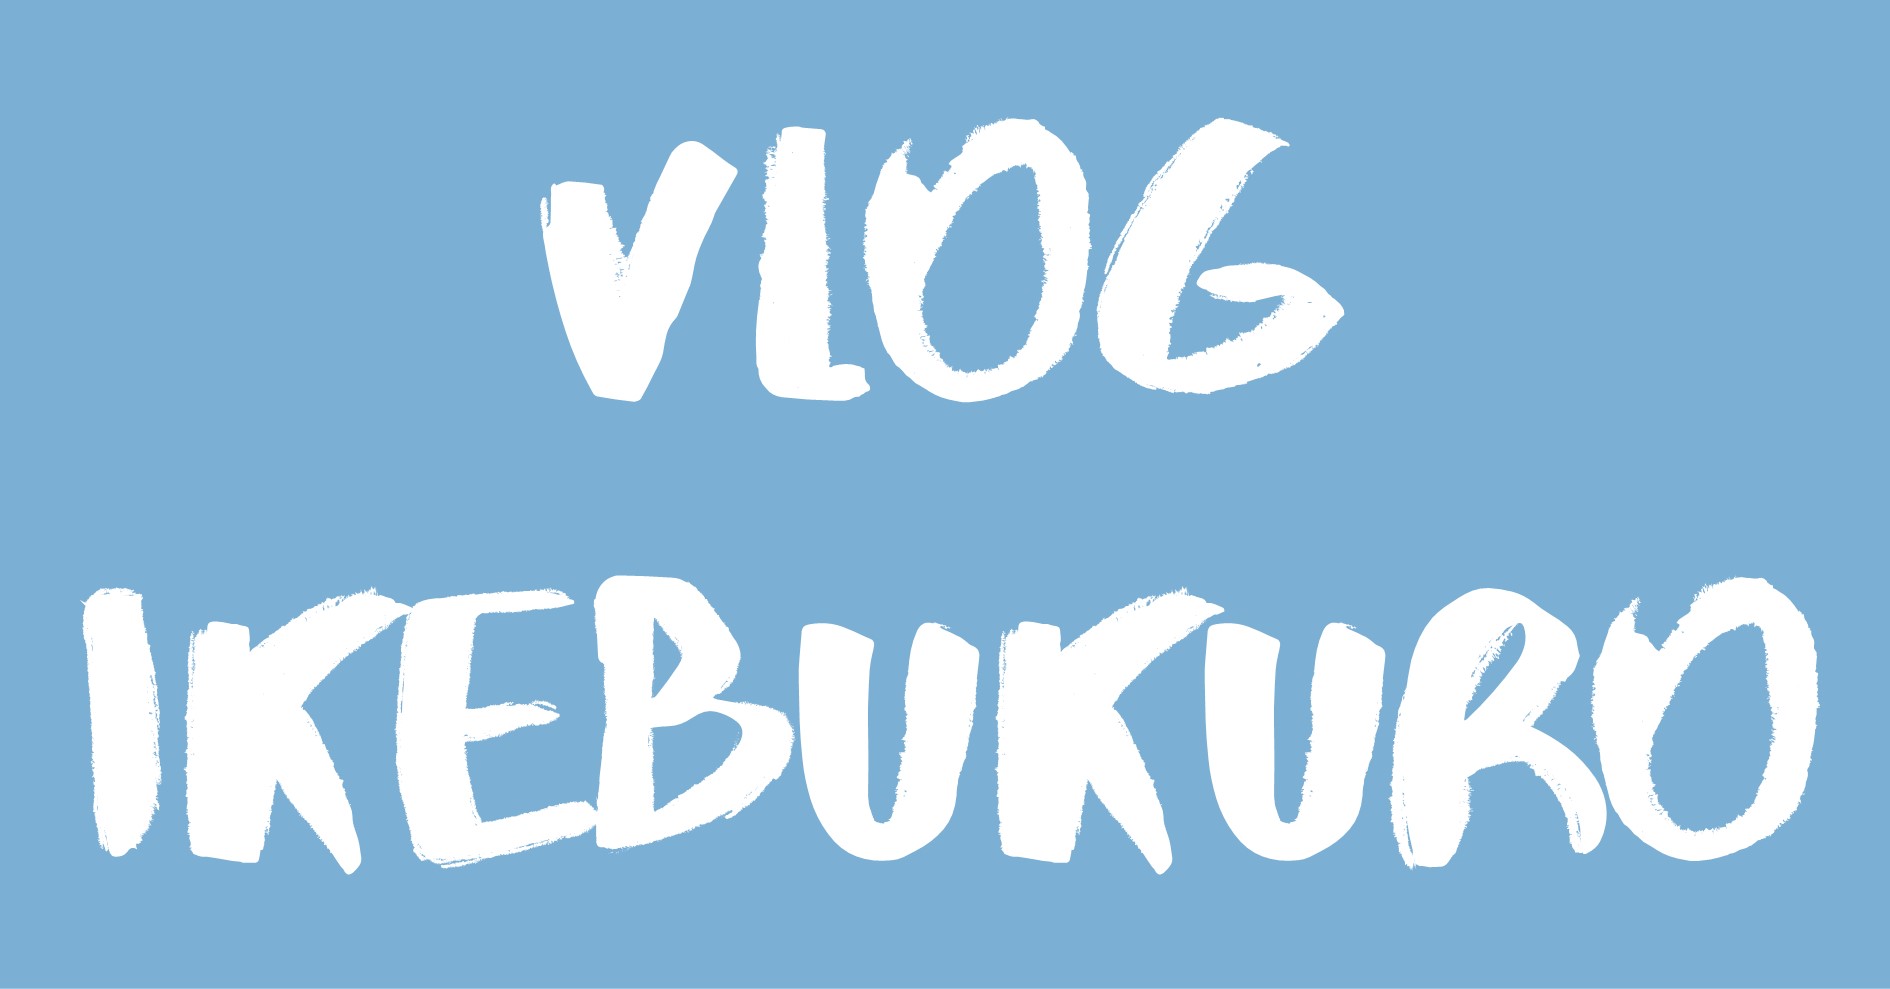 Vlog Ikebukuro